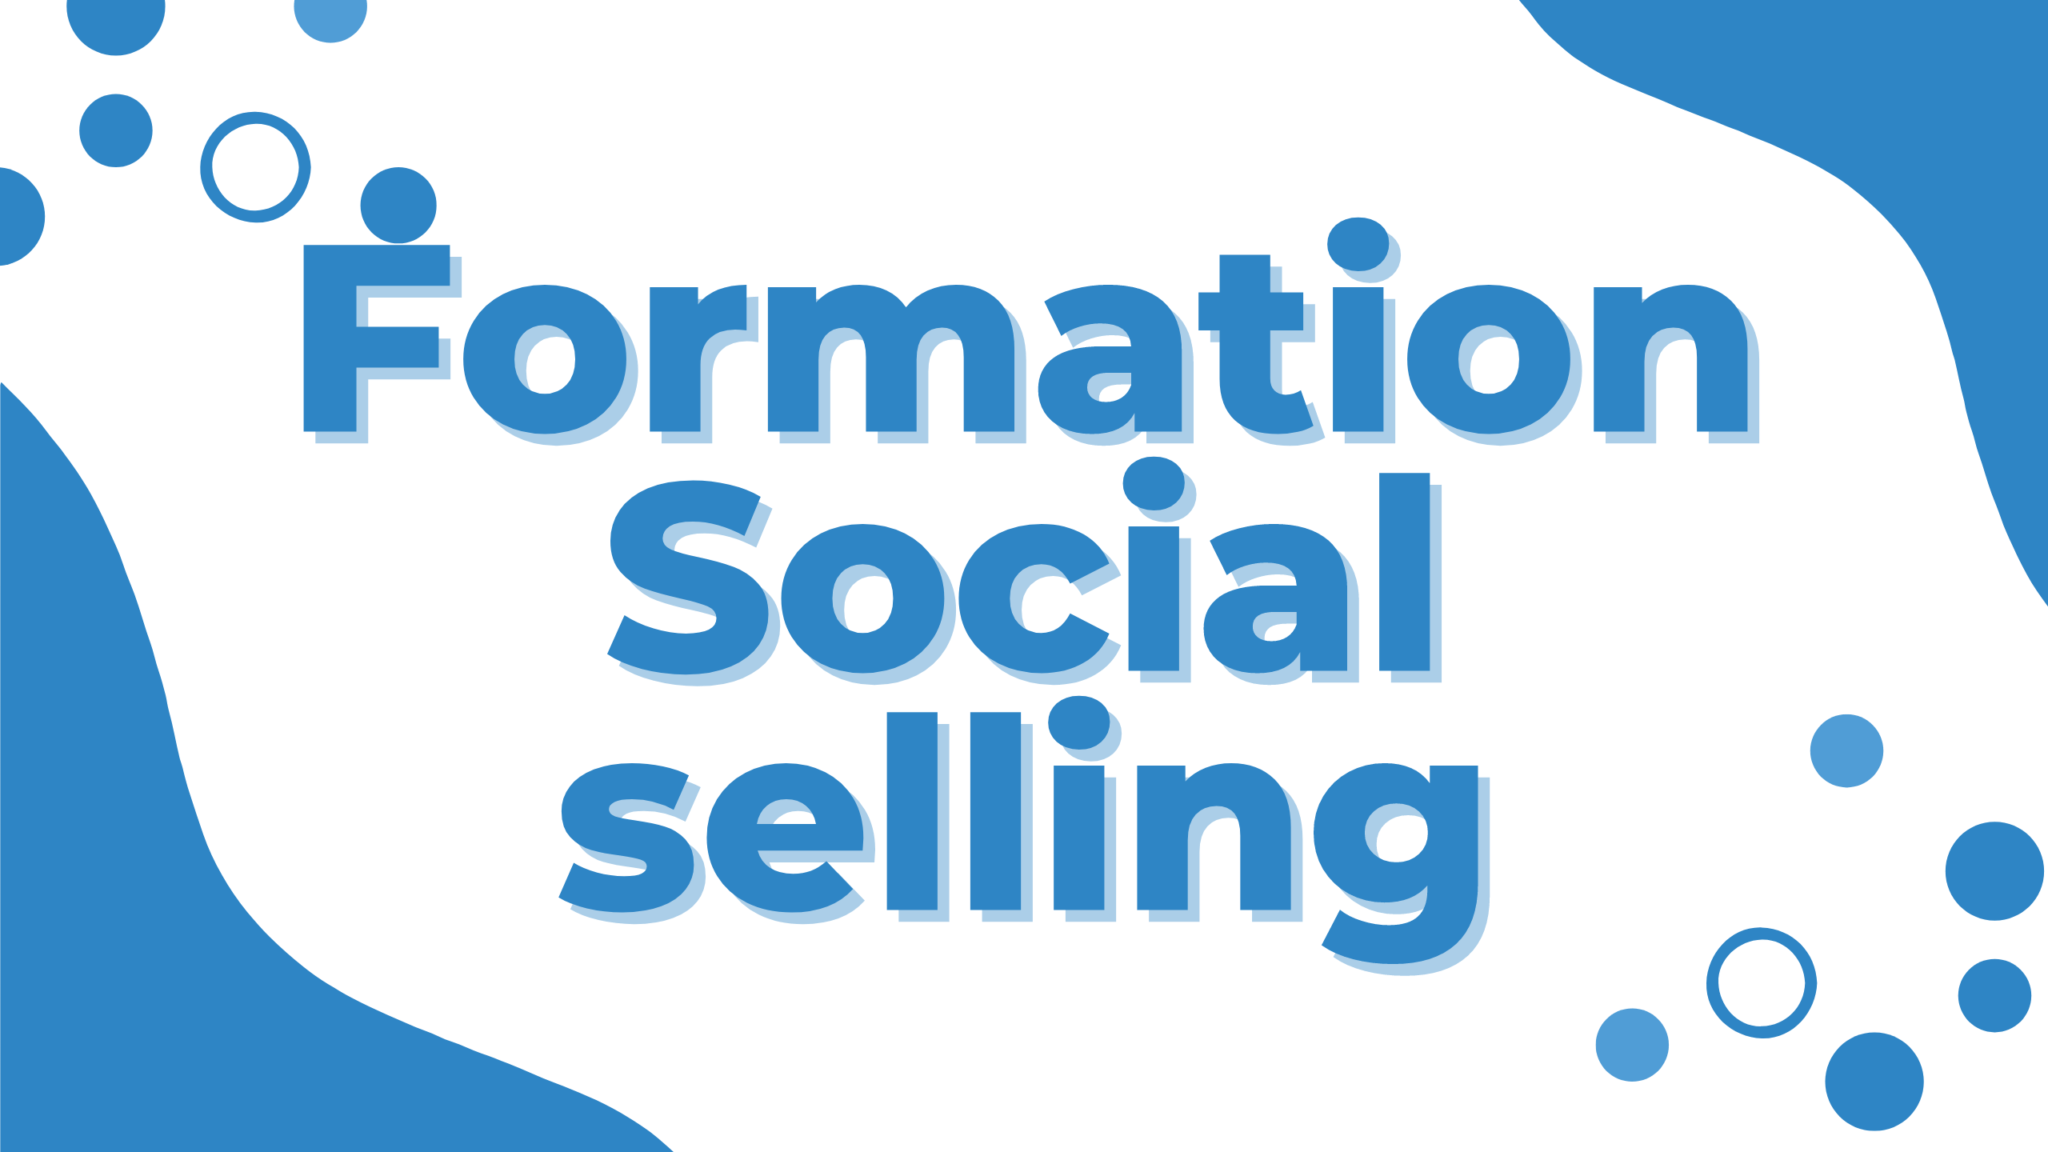 Formation Social selling LinkedIn Degraux